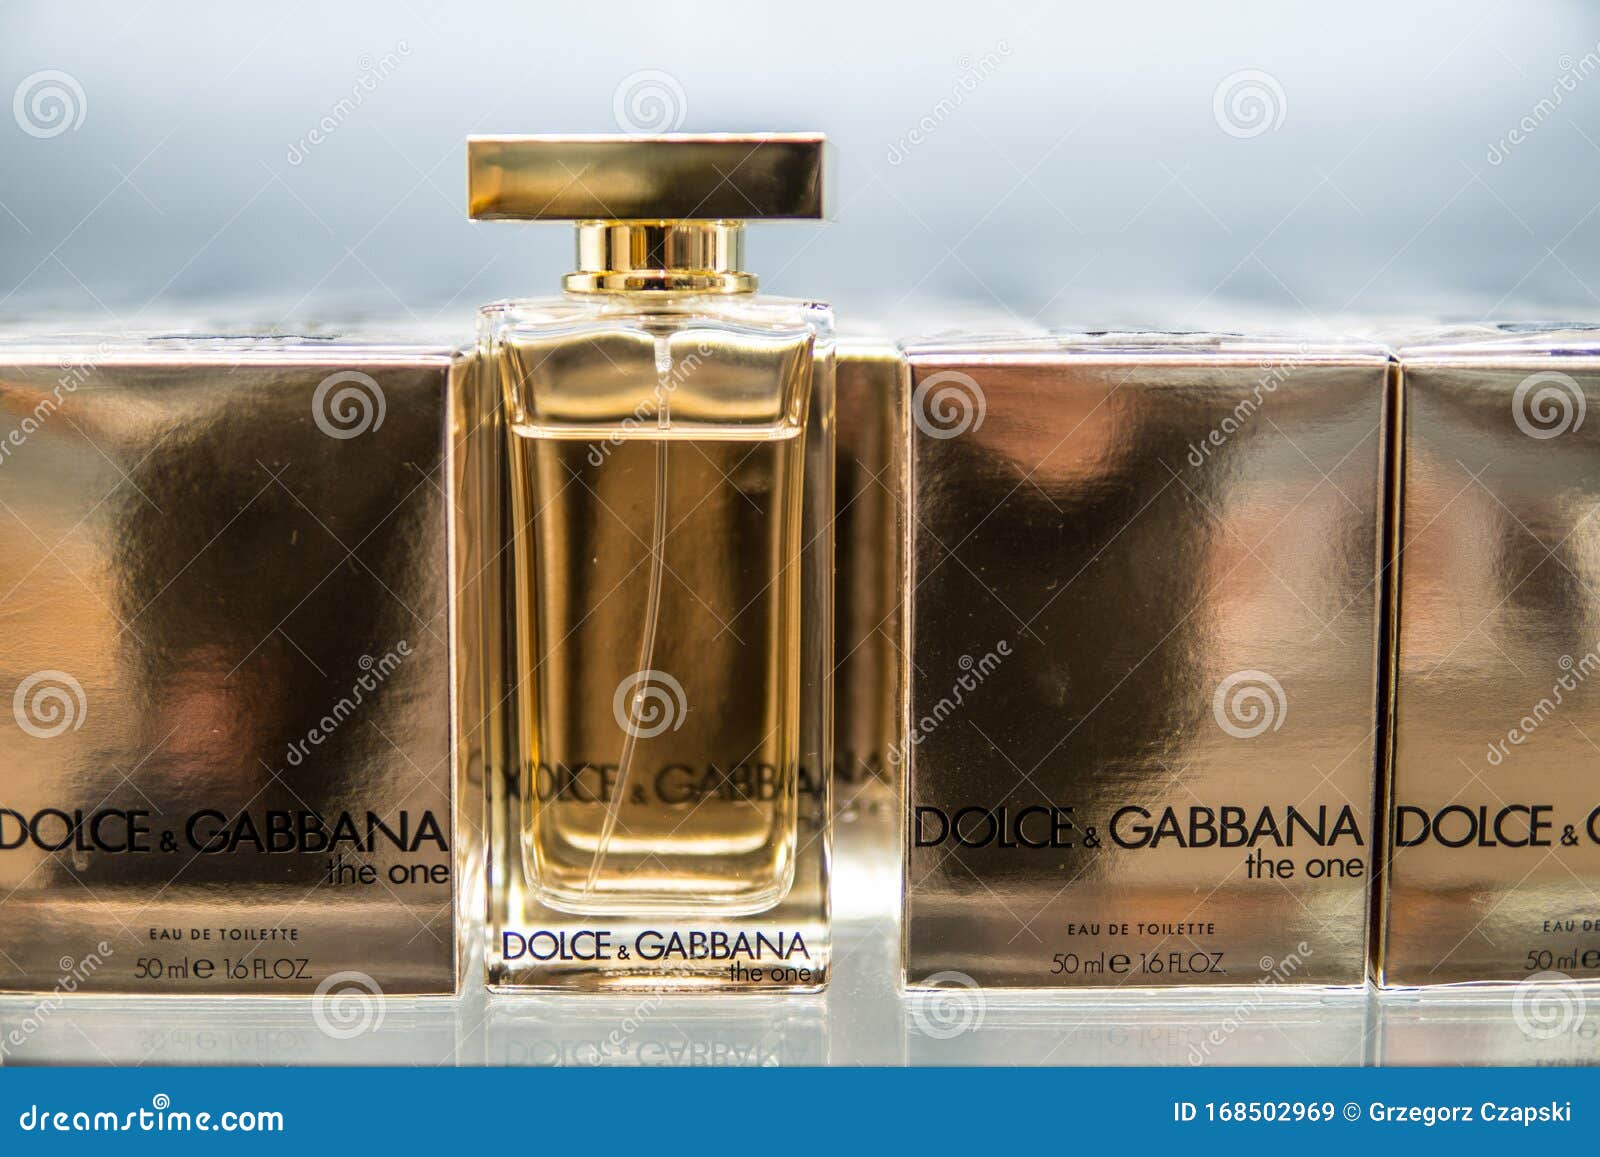 dolce and gabbana brown perfume